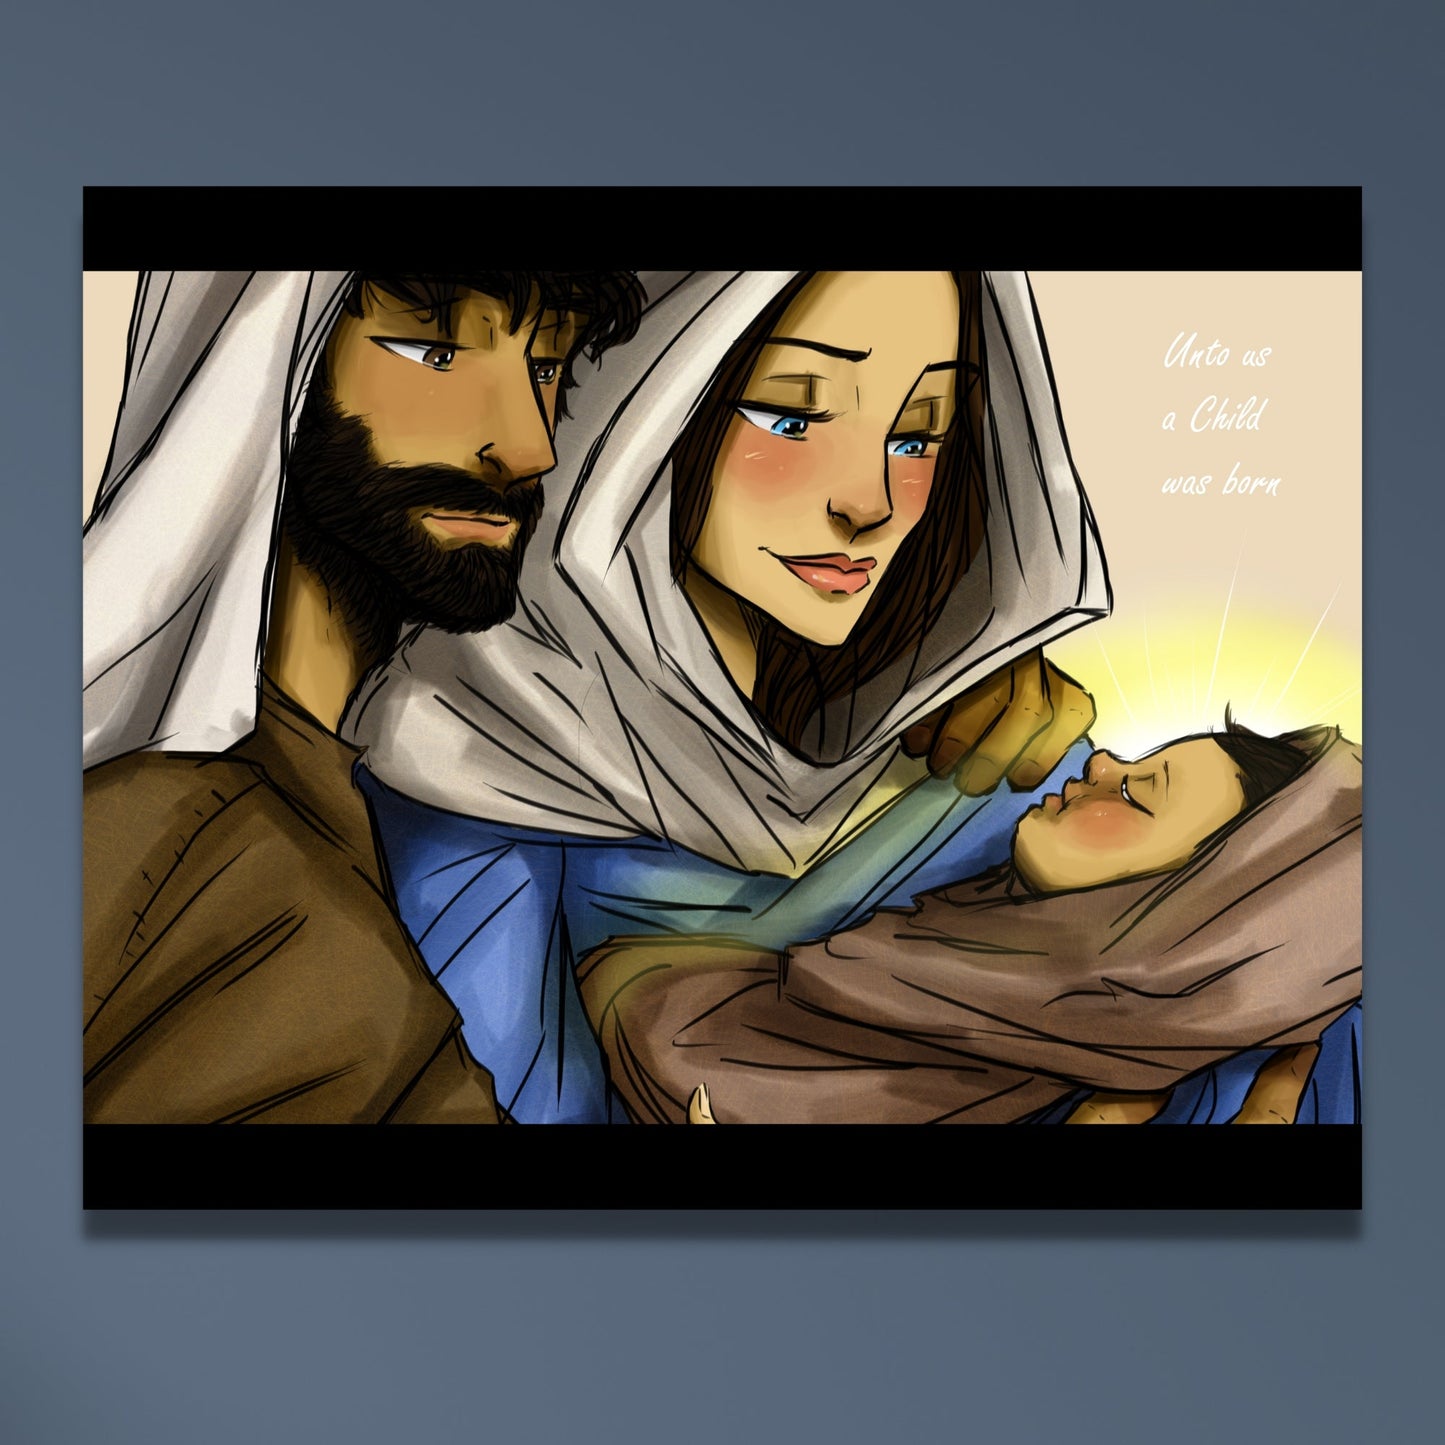 Baby Jesus, Mary, and Joseph Original Art - Inspirational Art Print (10x8)